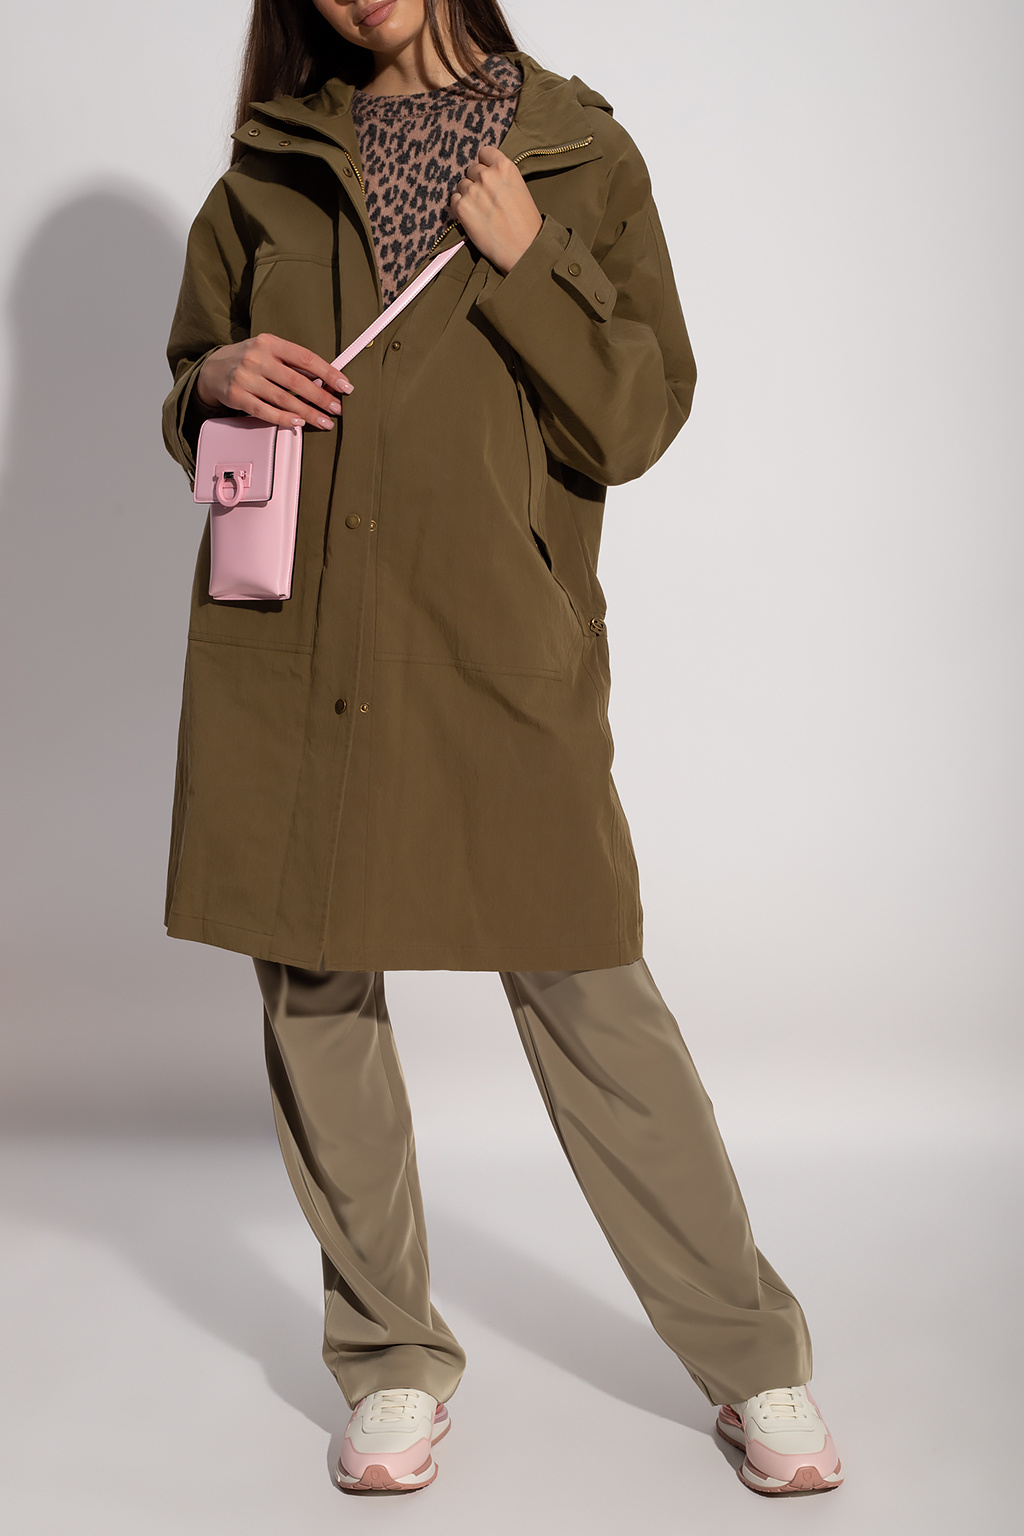 Michael Michael Kors Oversize coat